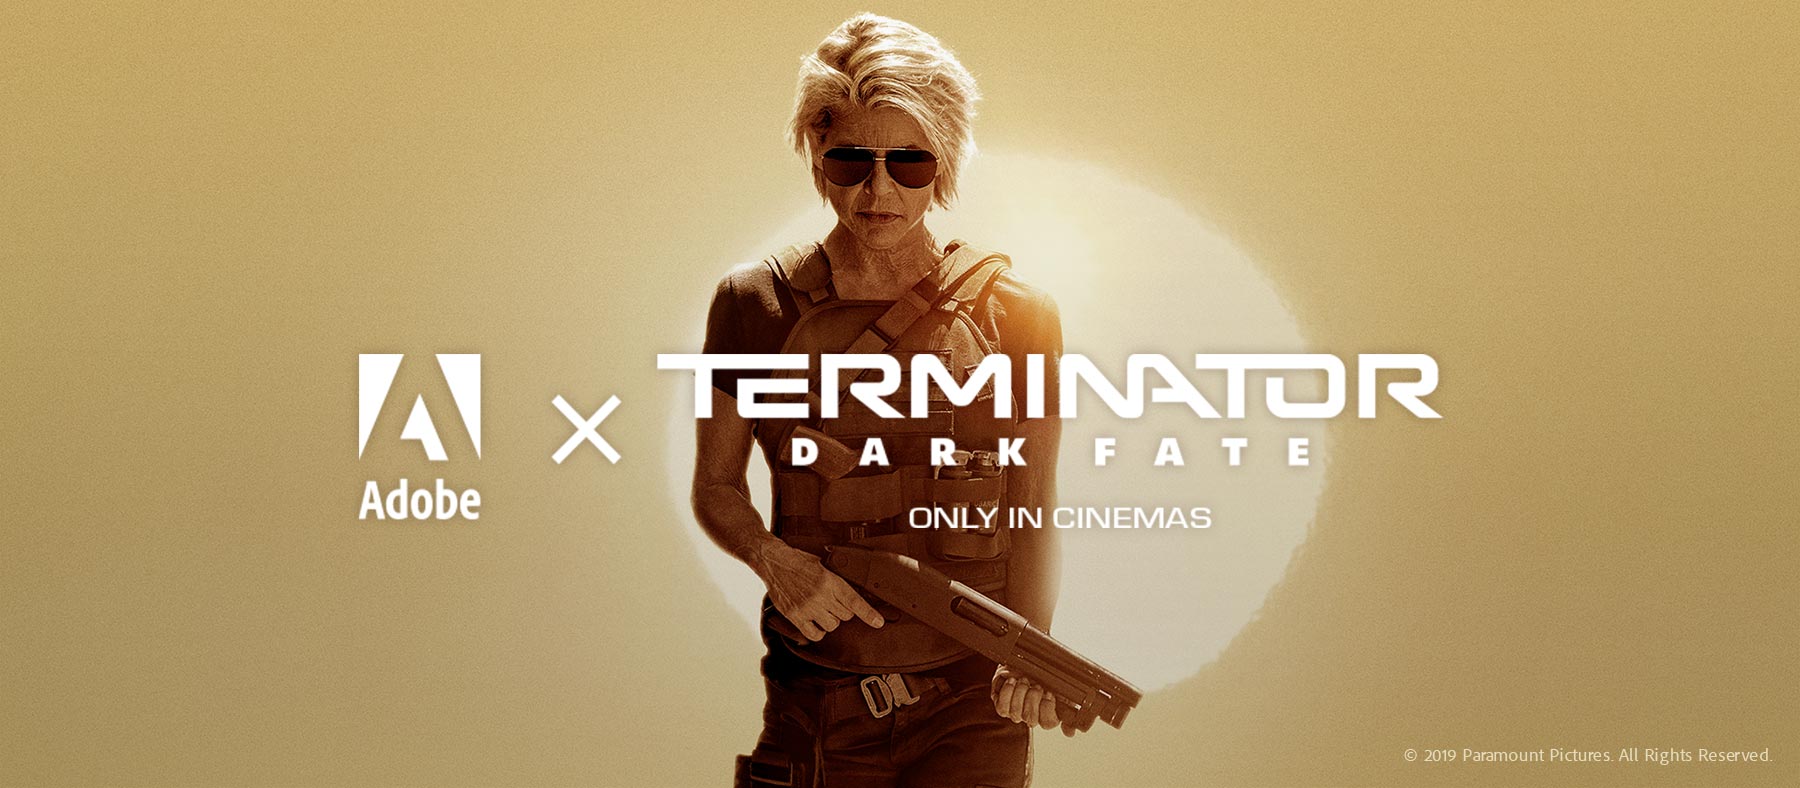 Working with Premiere Pro on Terminator: Dark Fate 4